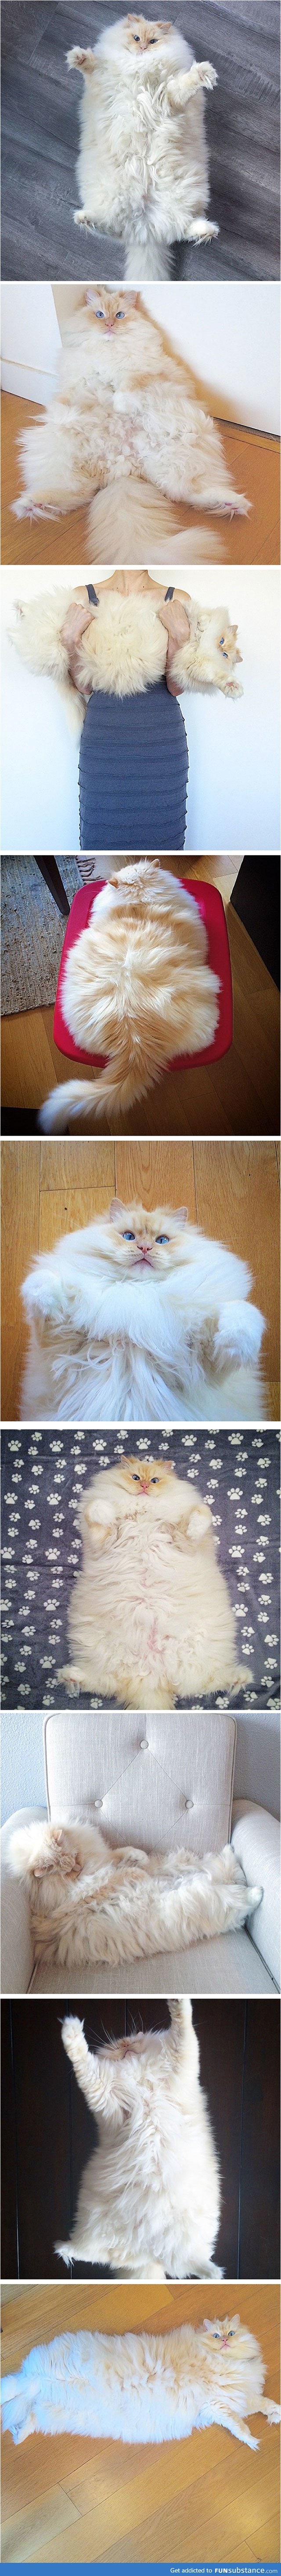 This Majestic Cat Has Cloud-Like Fur